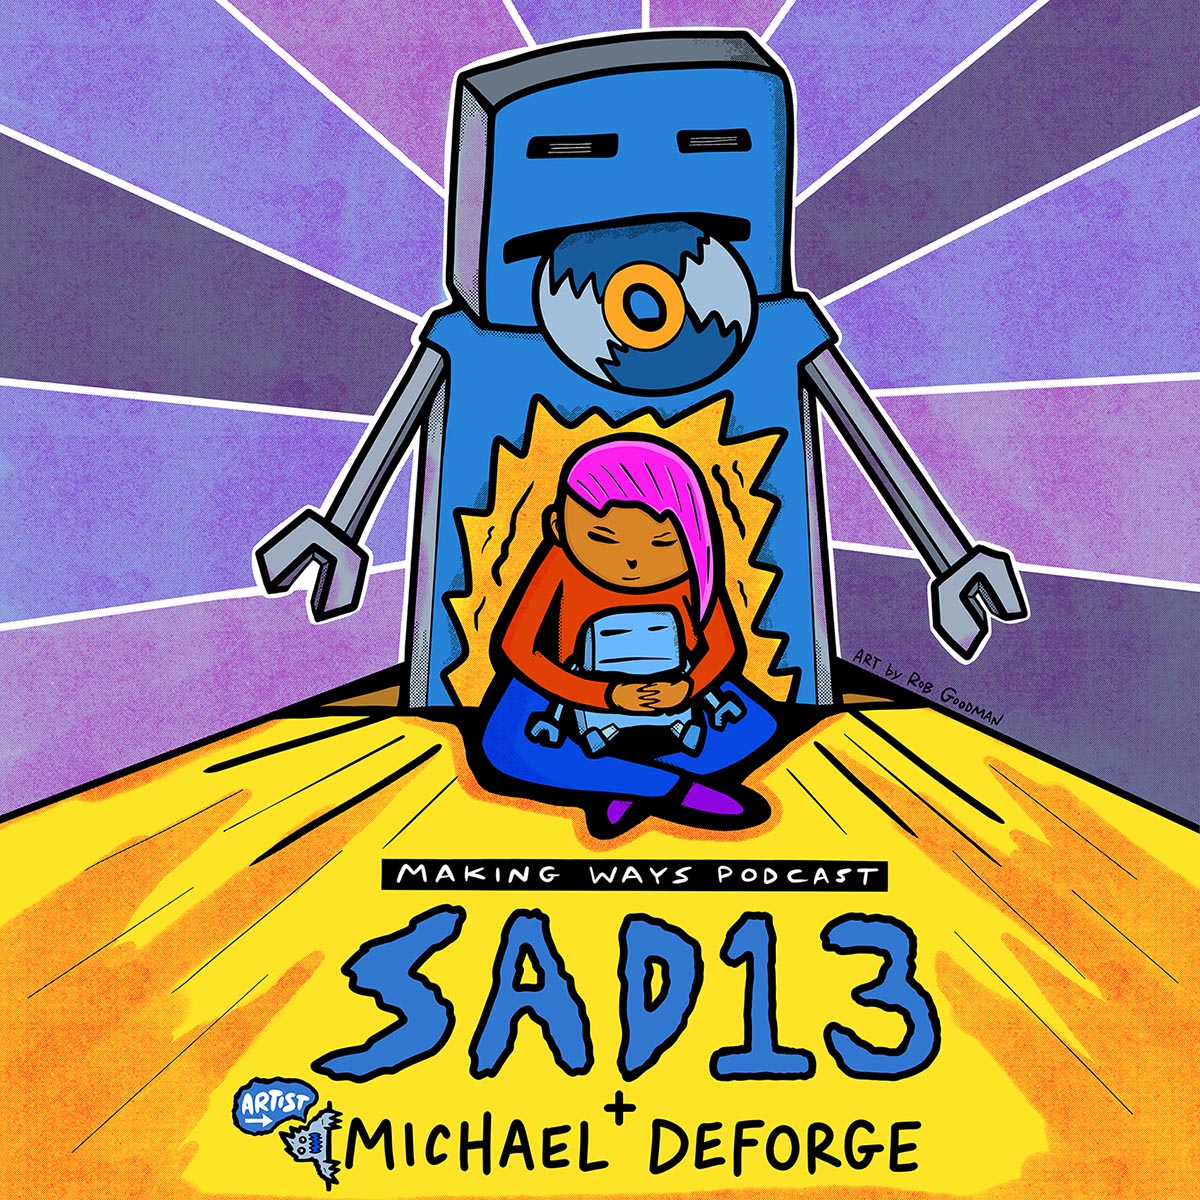 The Art of Sad13 + Speedy Ortiz with Sadie Dupuis and artist Michael DeForge